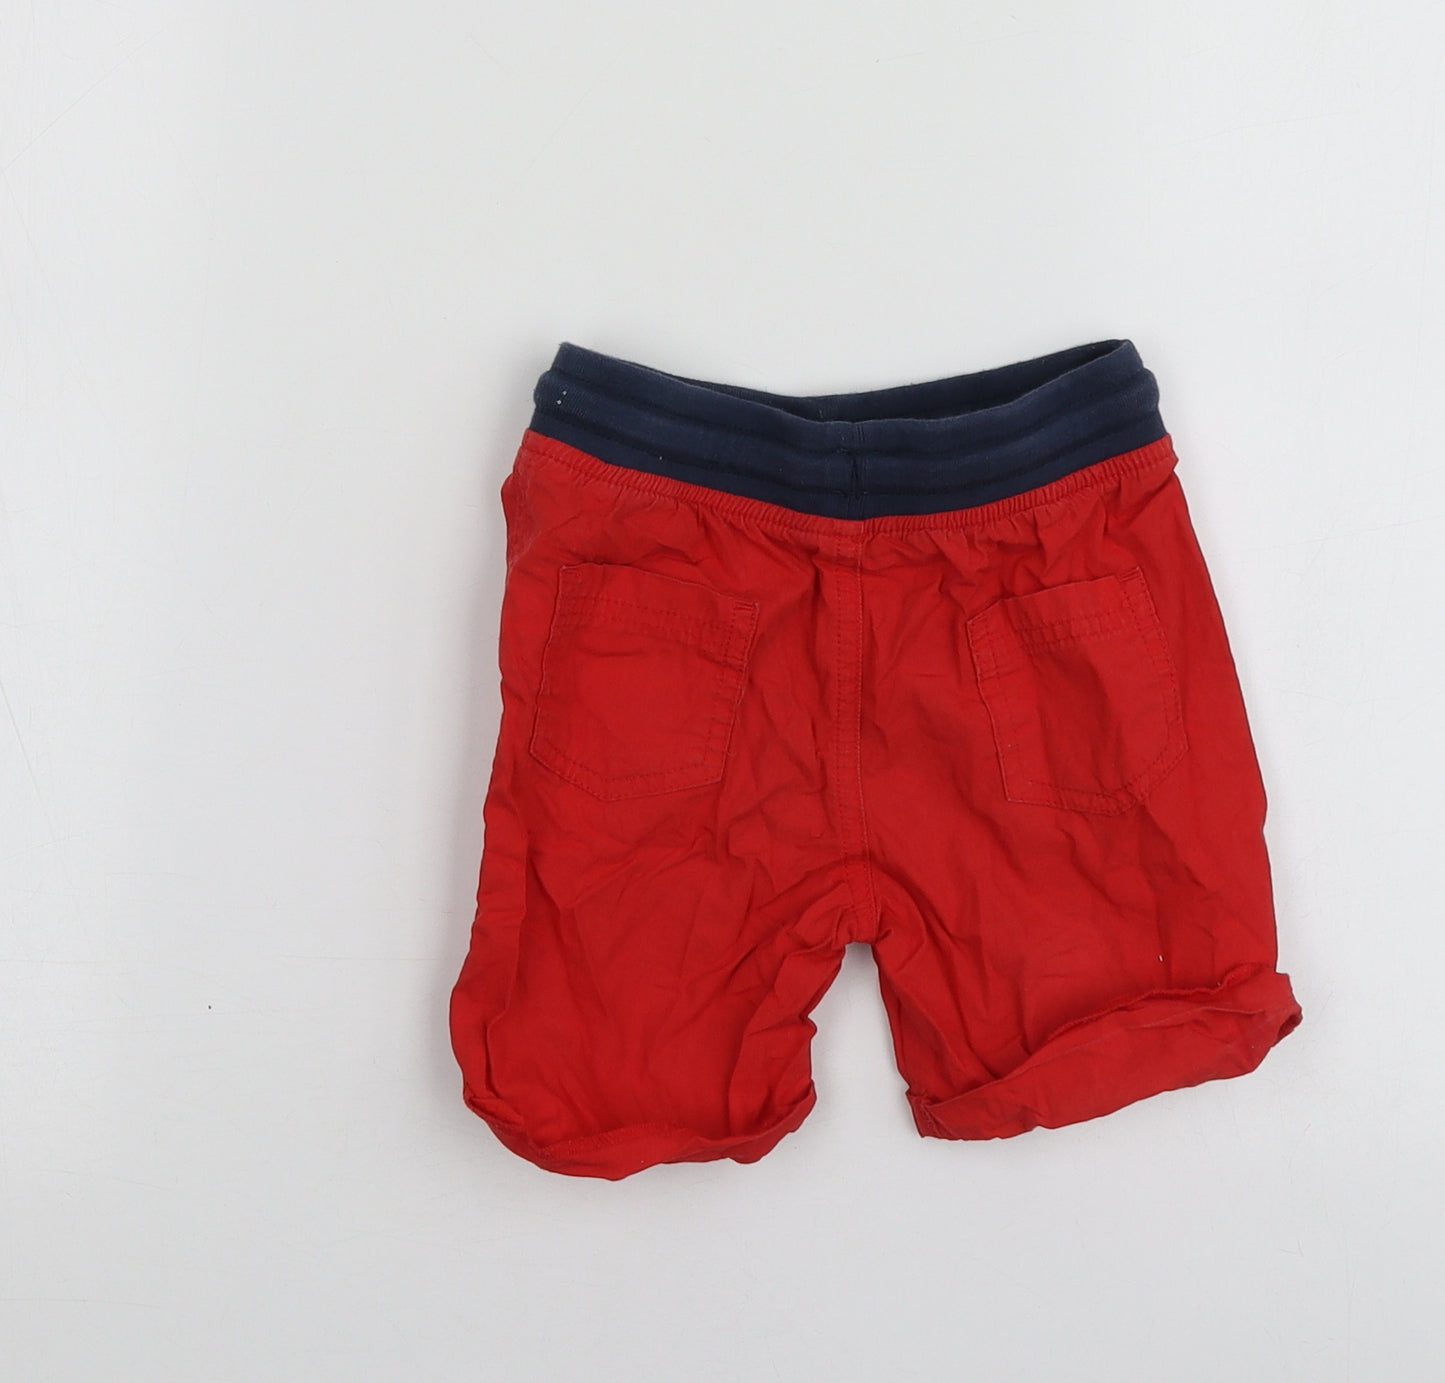 Urban Rascals Boys Red  Cotton Chino Shorts Size 2 Years  Regular